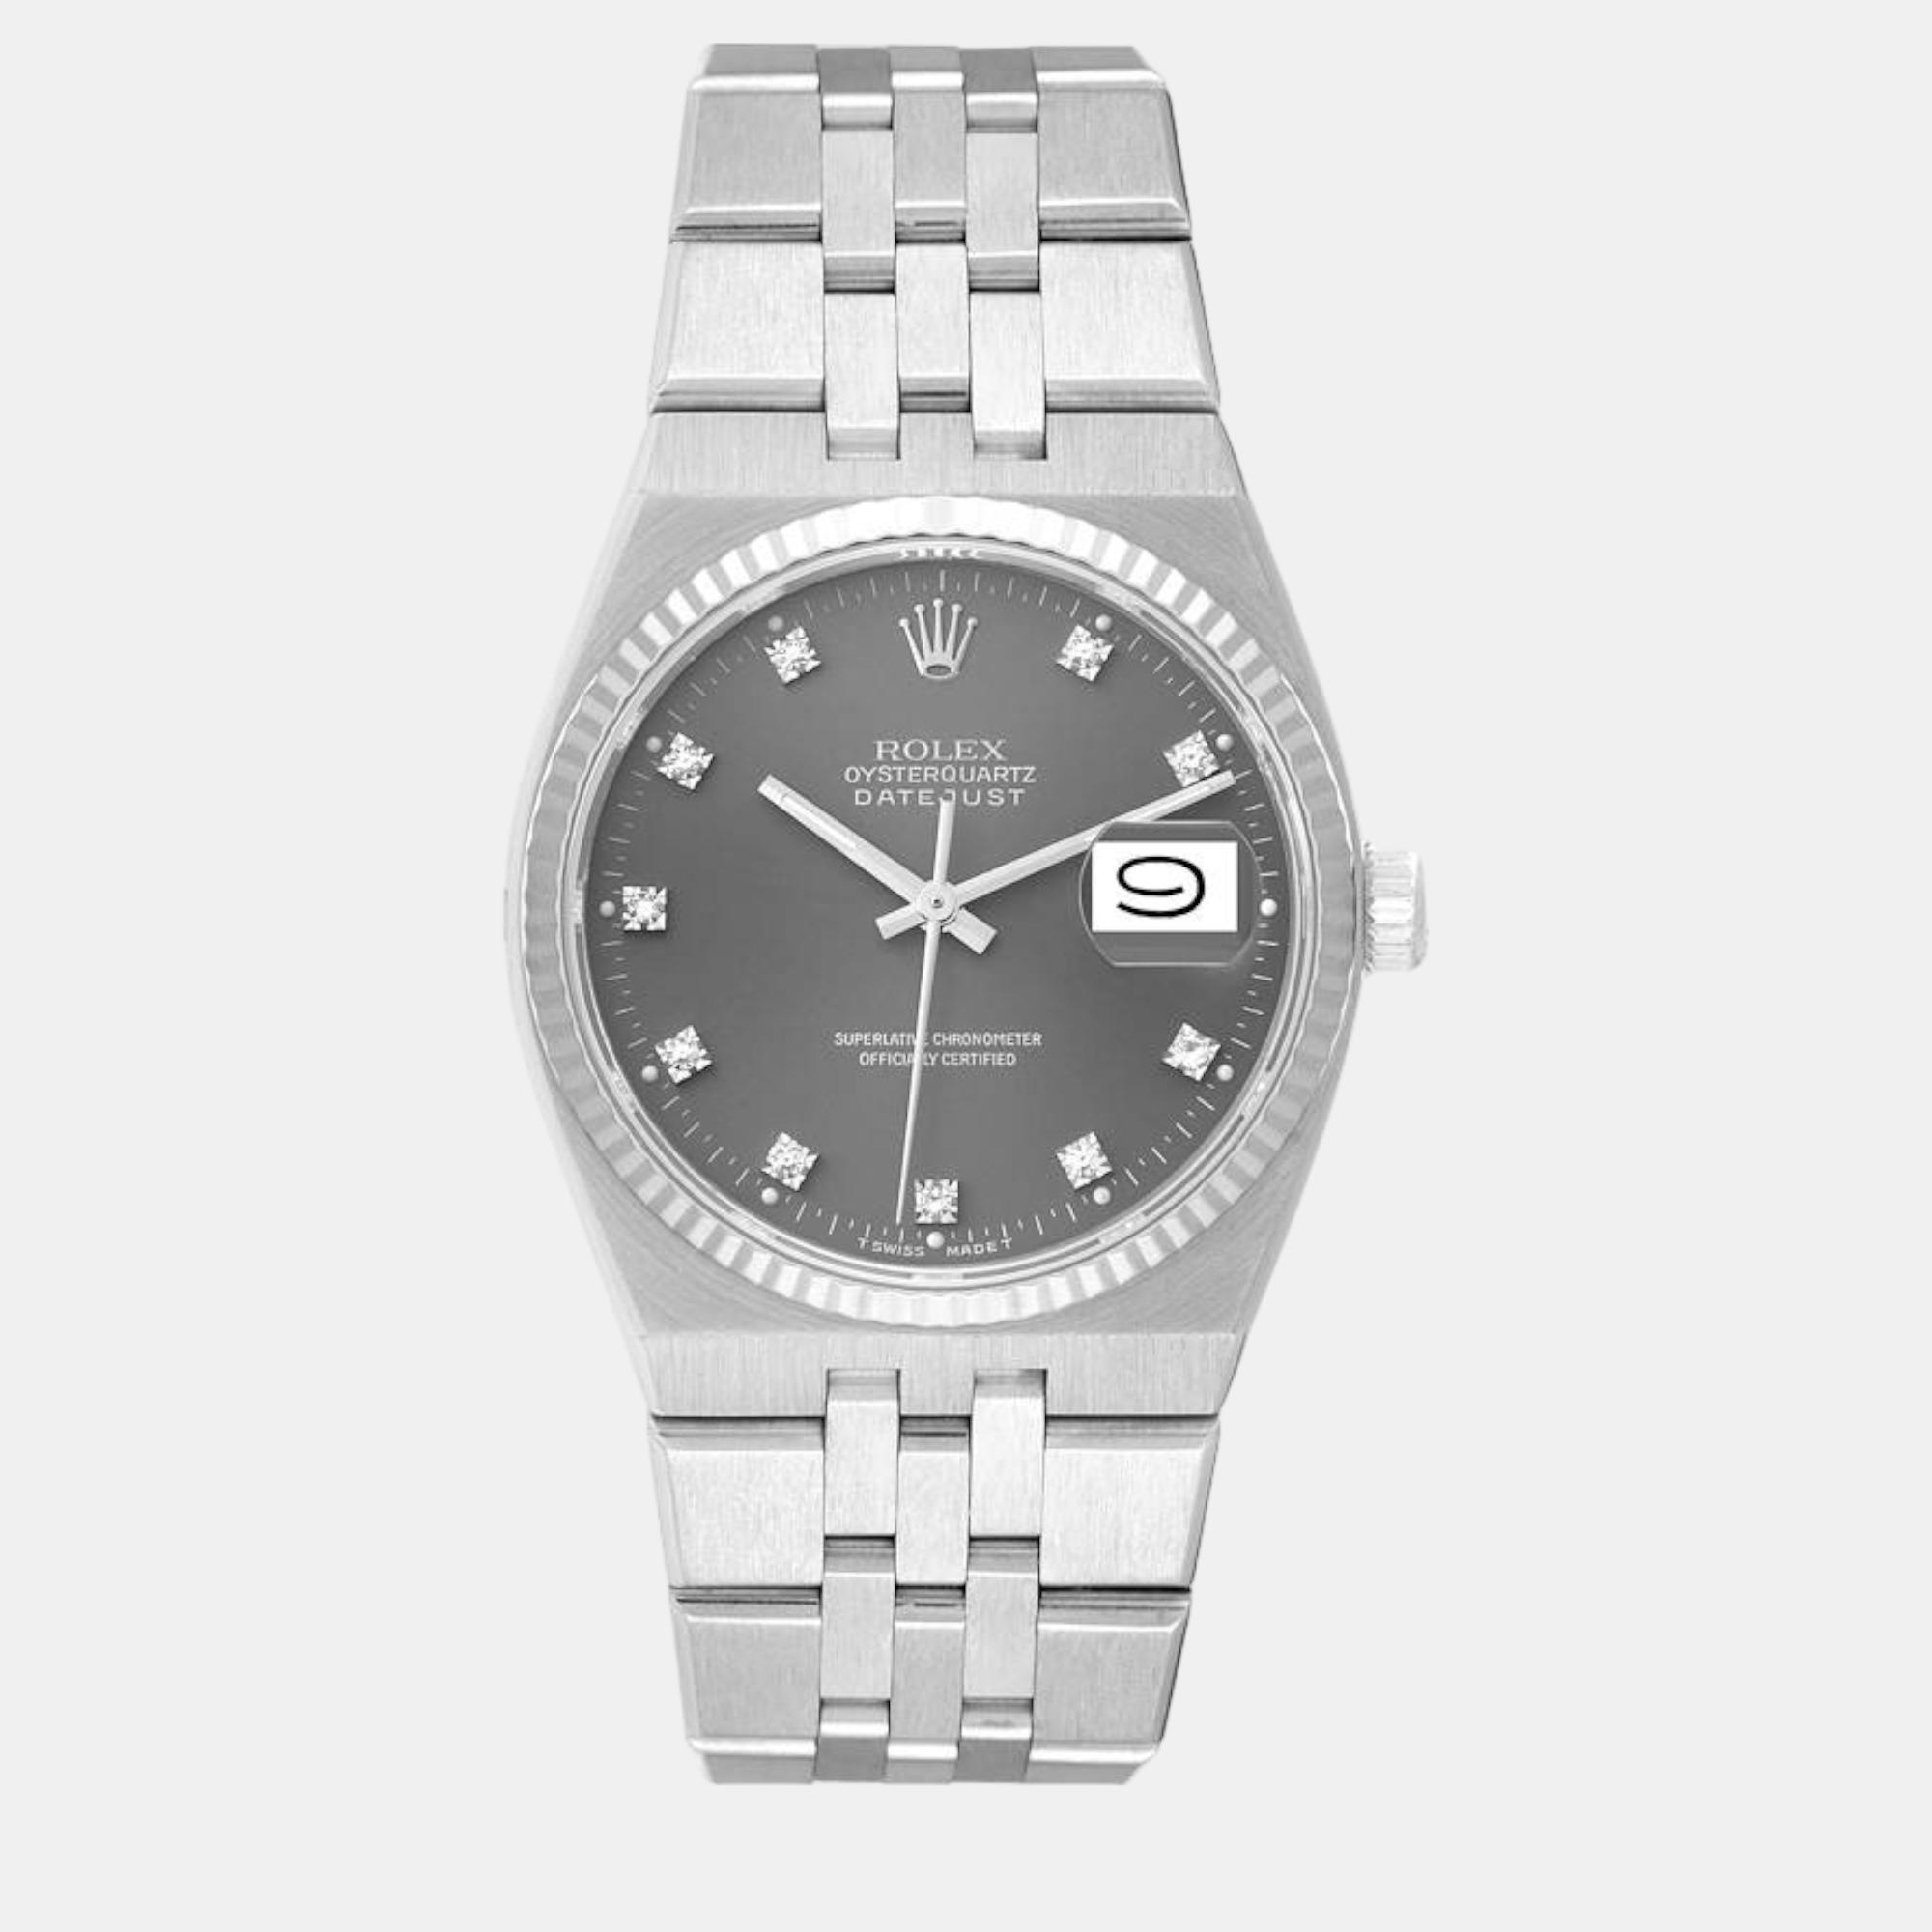 Rolex oyster quartz datejust steel white gold diamond dial men's watch 17014 36 mm